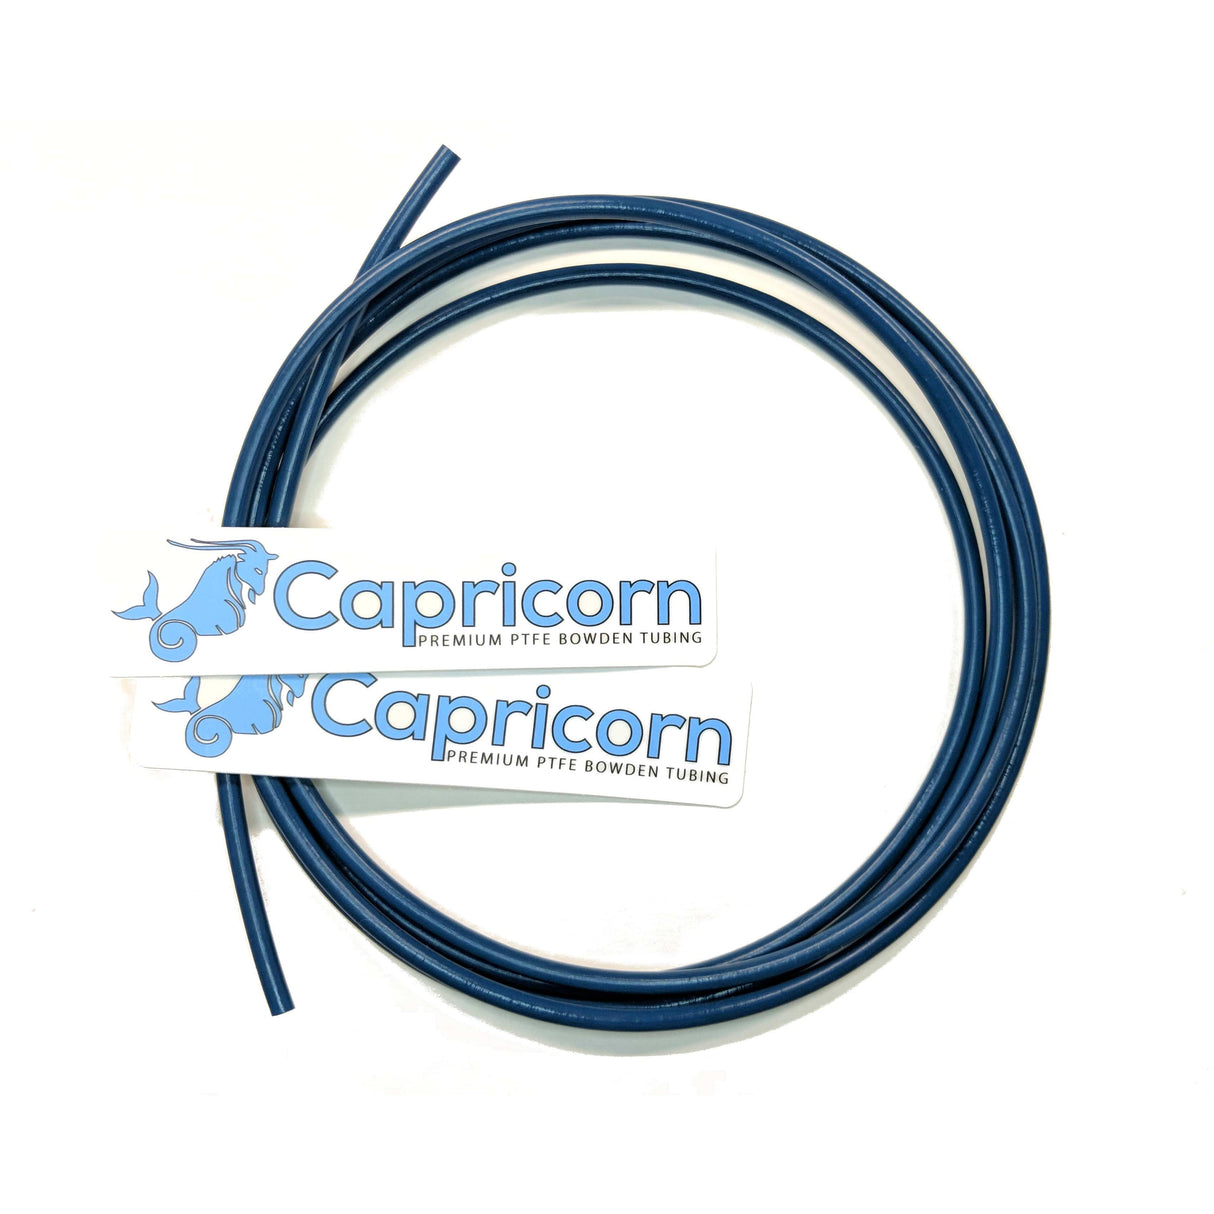  Creality Official 1 Meter Capricorn Teflon Tube